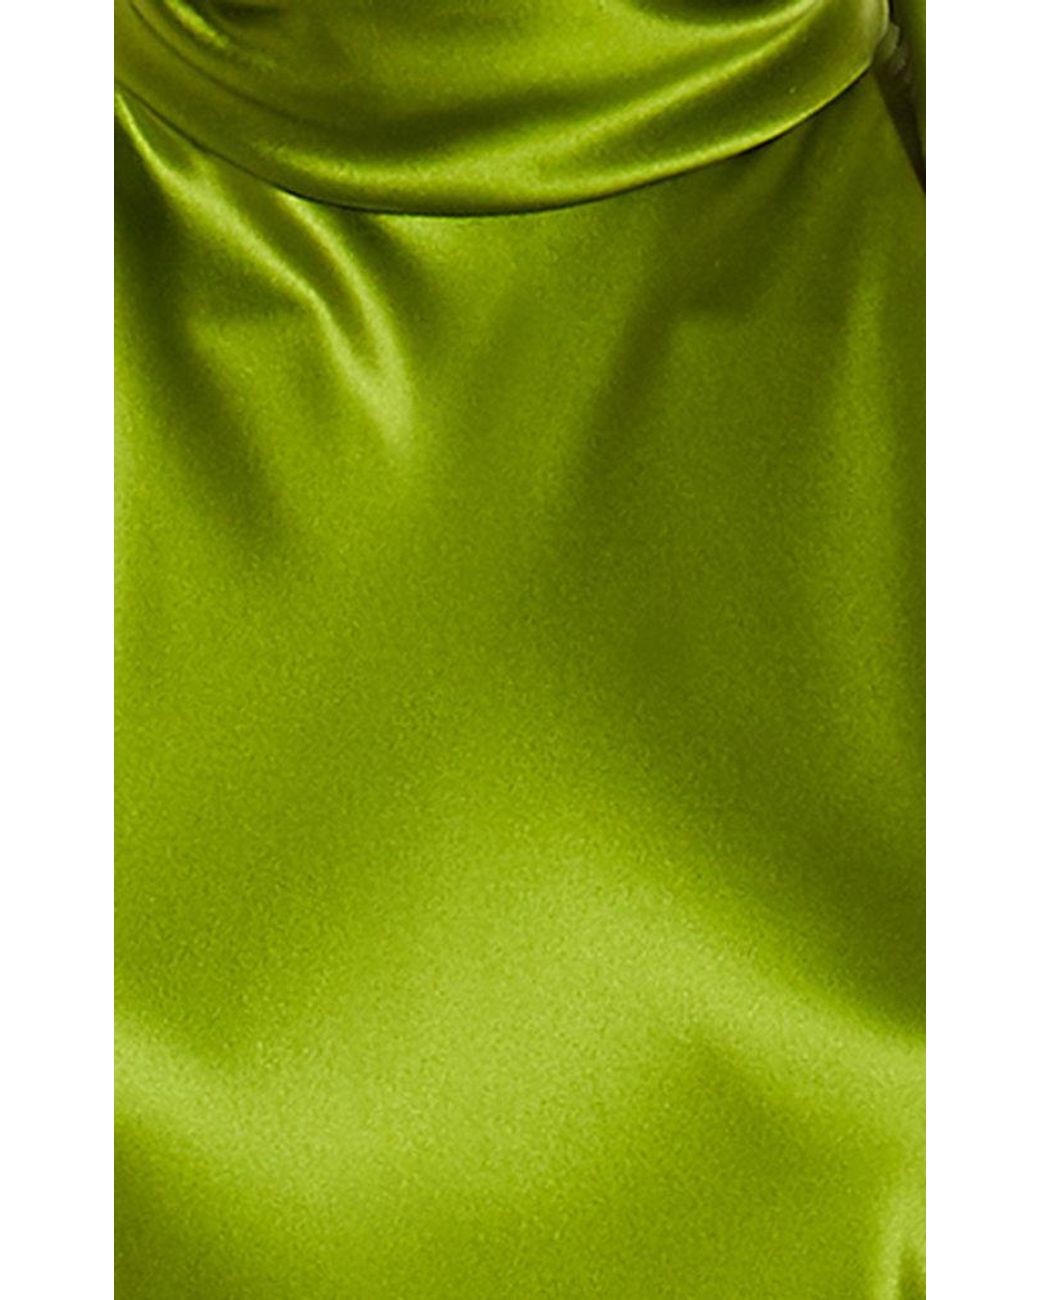 Brandon Maxwell Cape-effect Gingham Silk-shantung Midi Dress - Green -  ShopStyle